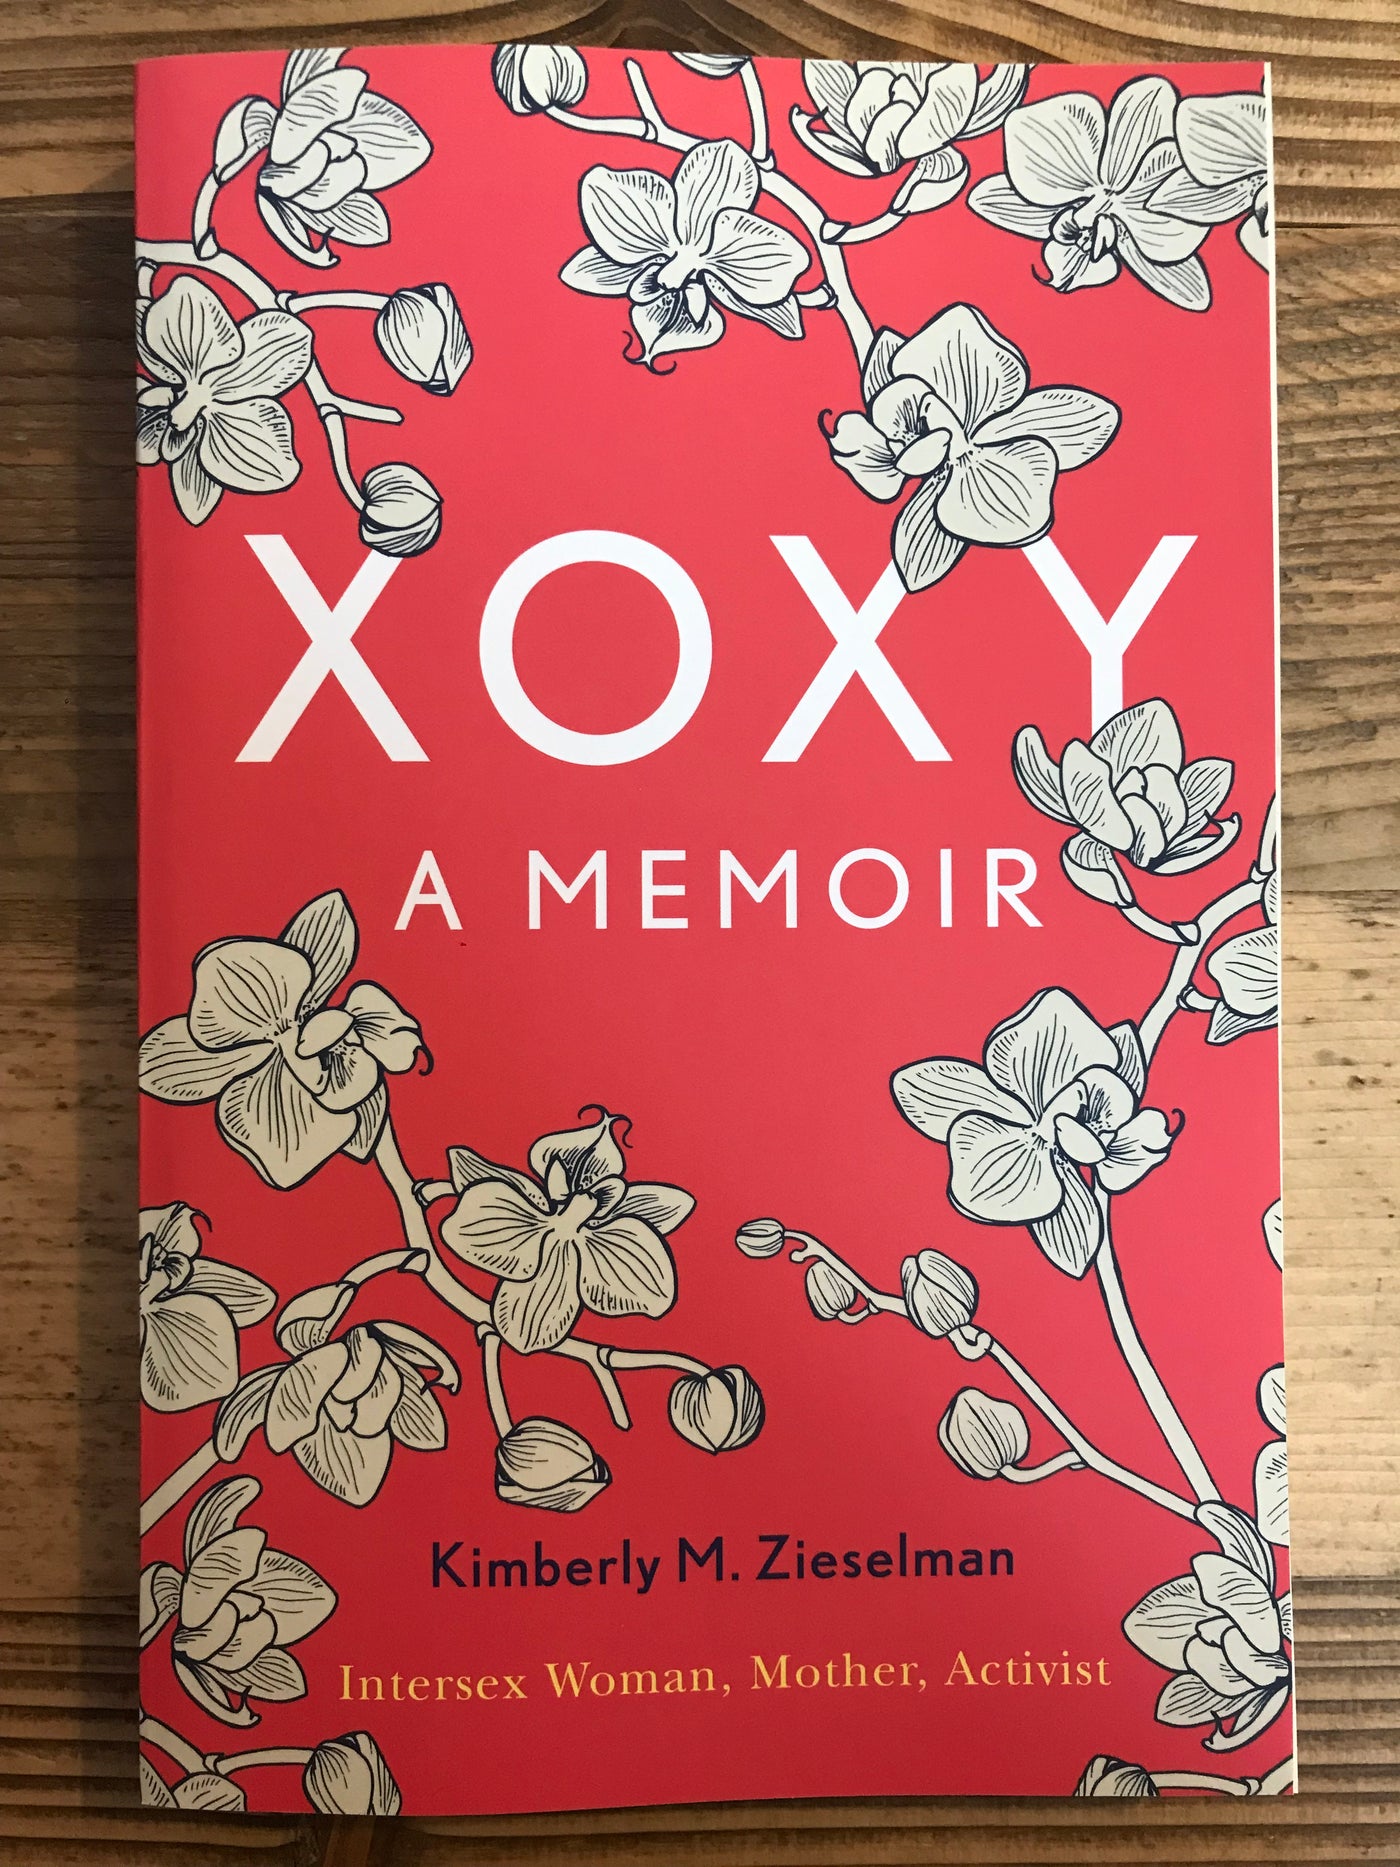 XOXY: A Memoir (Intersex Woman, Mother, Activist)